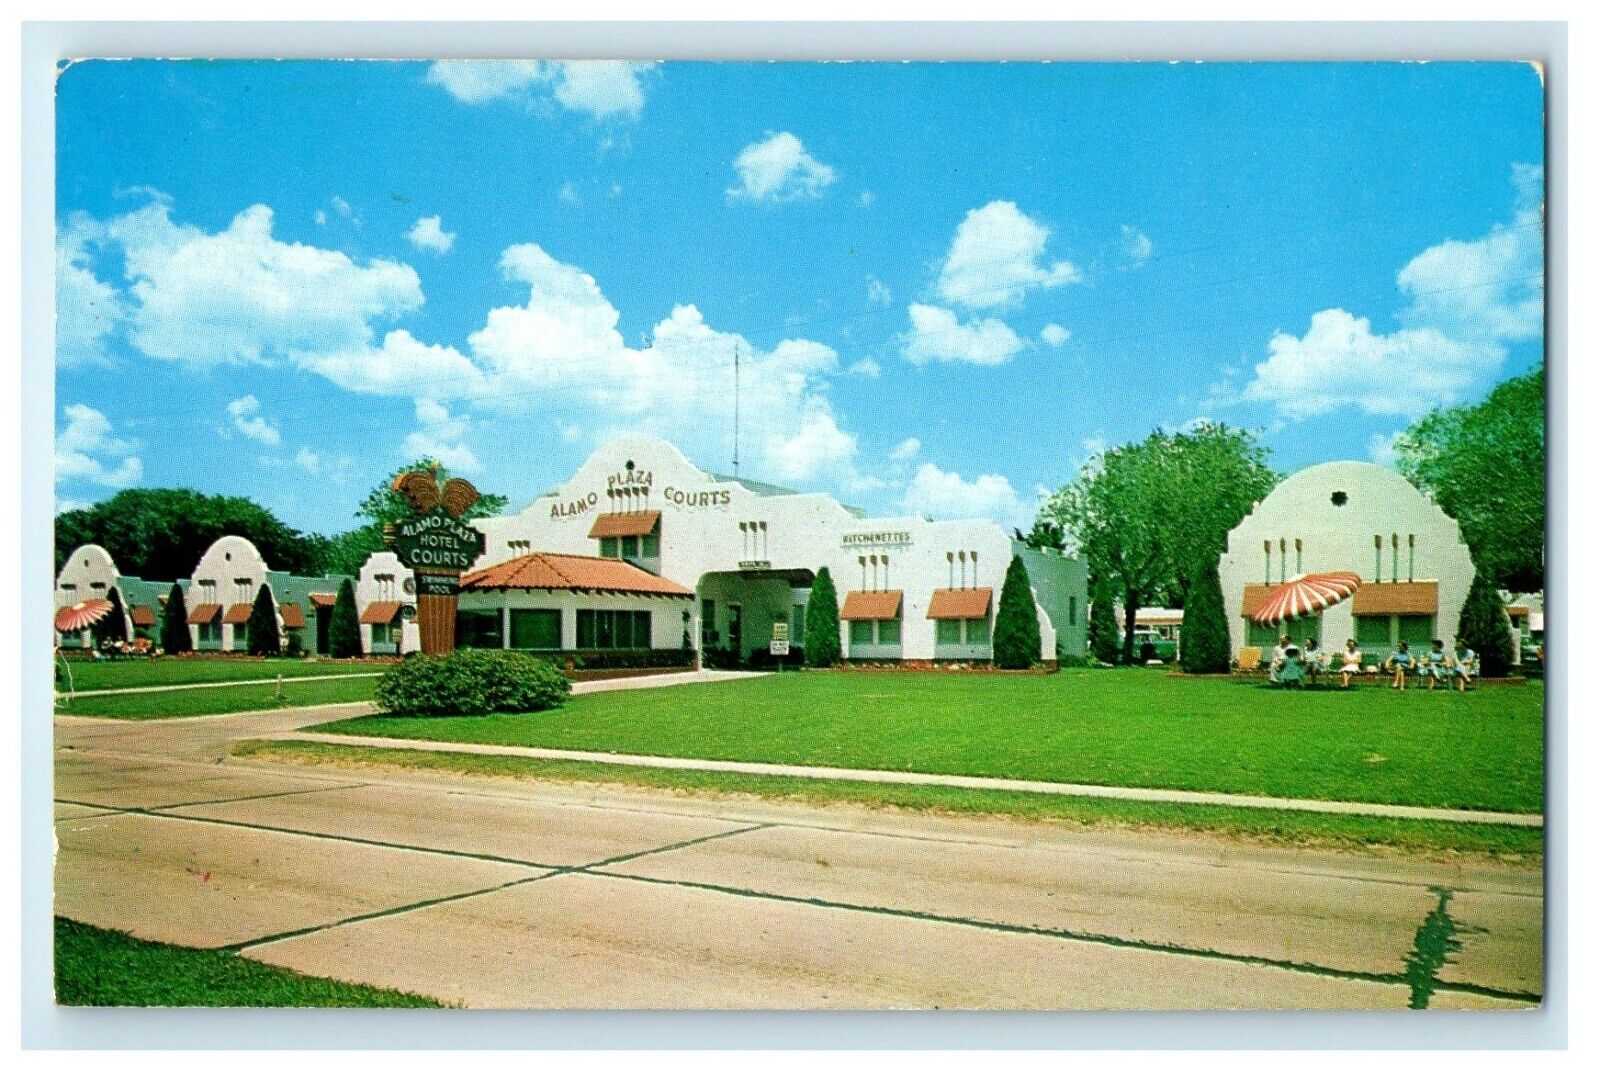 c1905 Alamo Plaza Hotel Courts And Restaurant Gulfport Mississippi MS Postcard